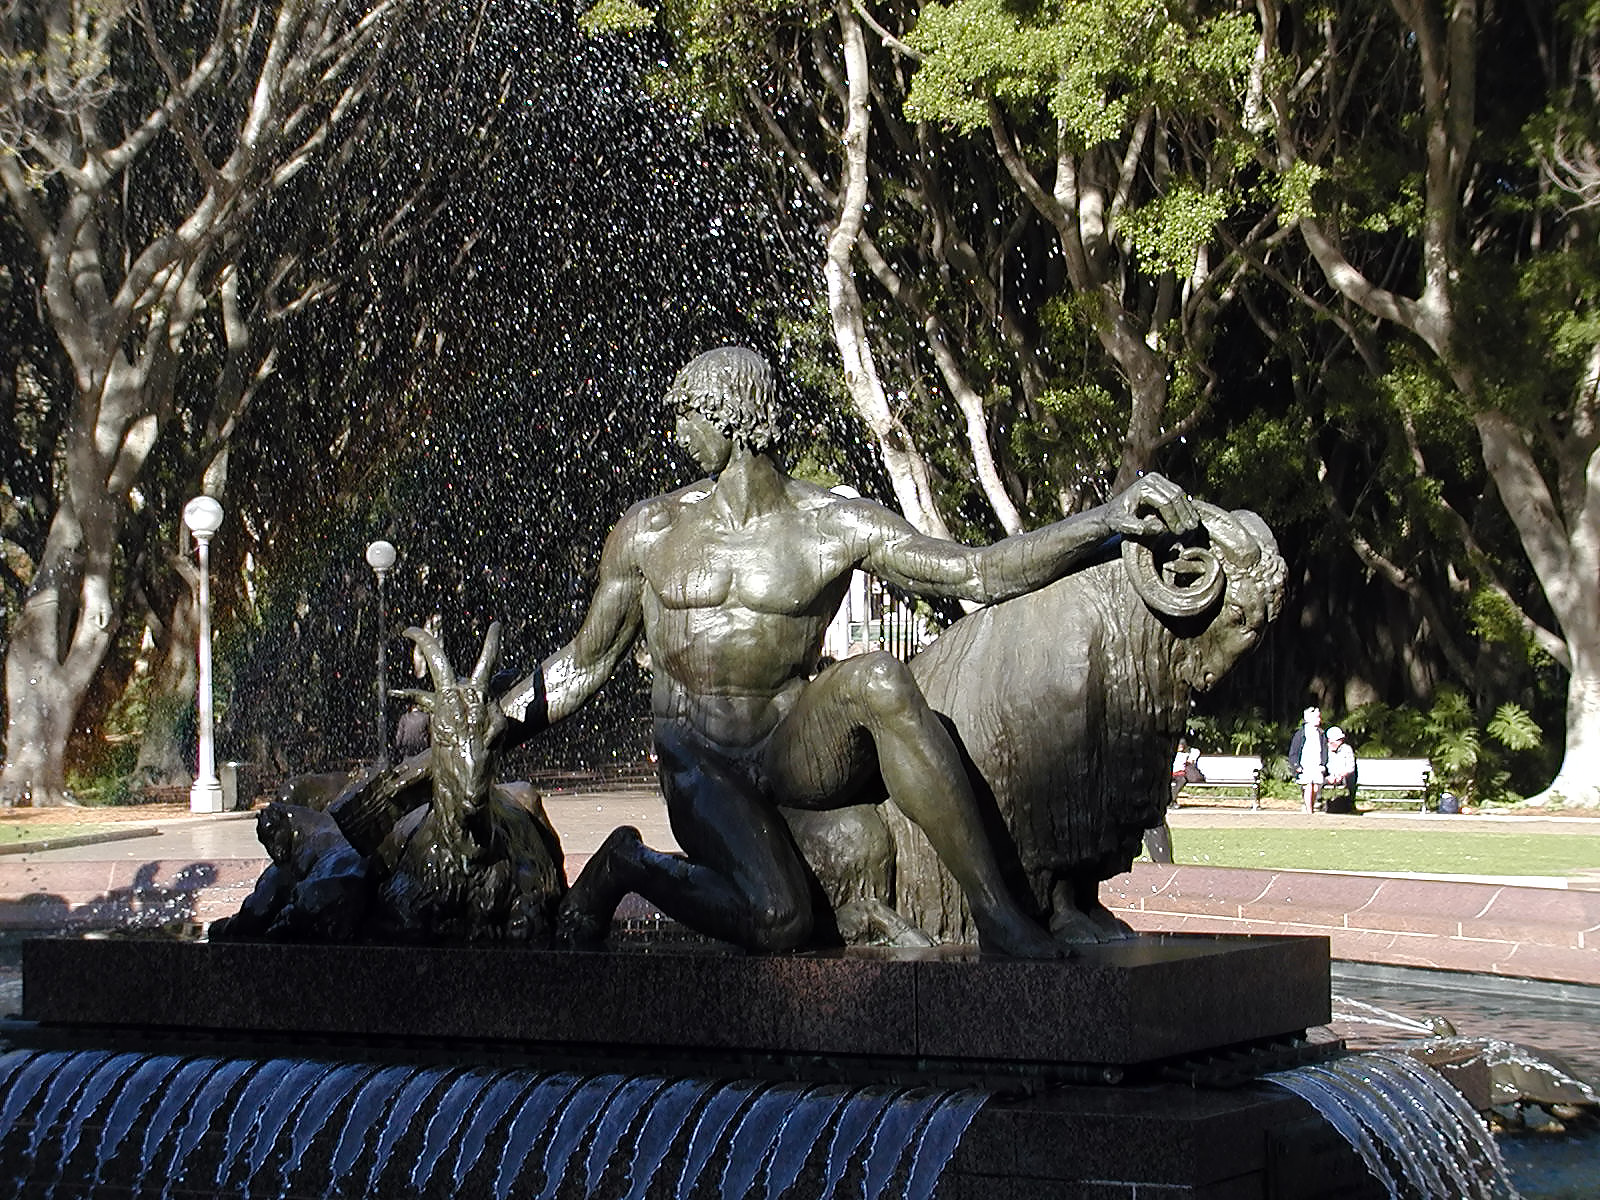 20-Jun-2001 09:57 - Sydney - Archibald Memorial Fountain